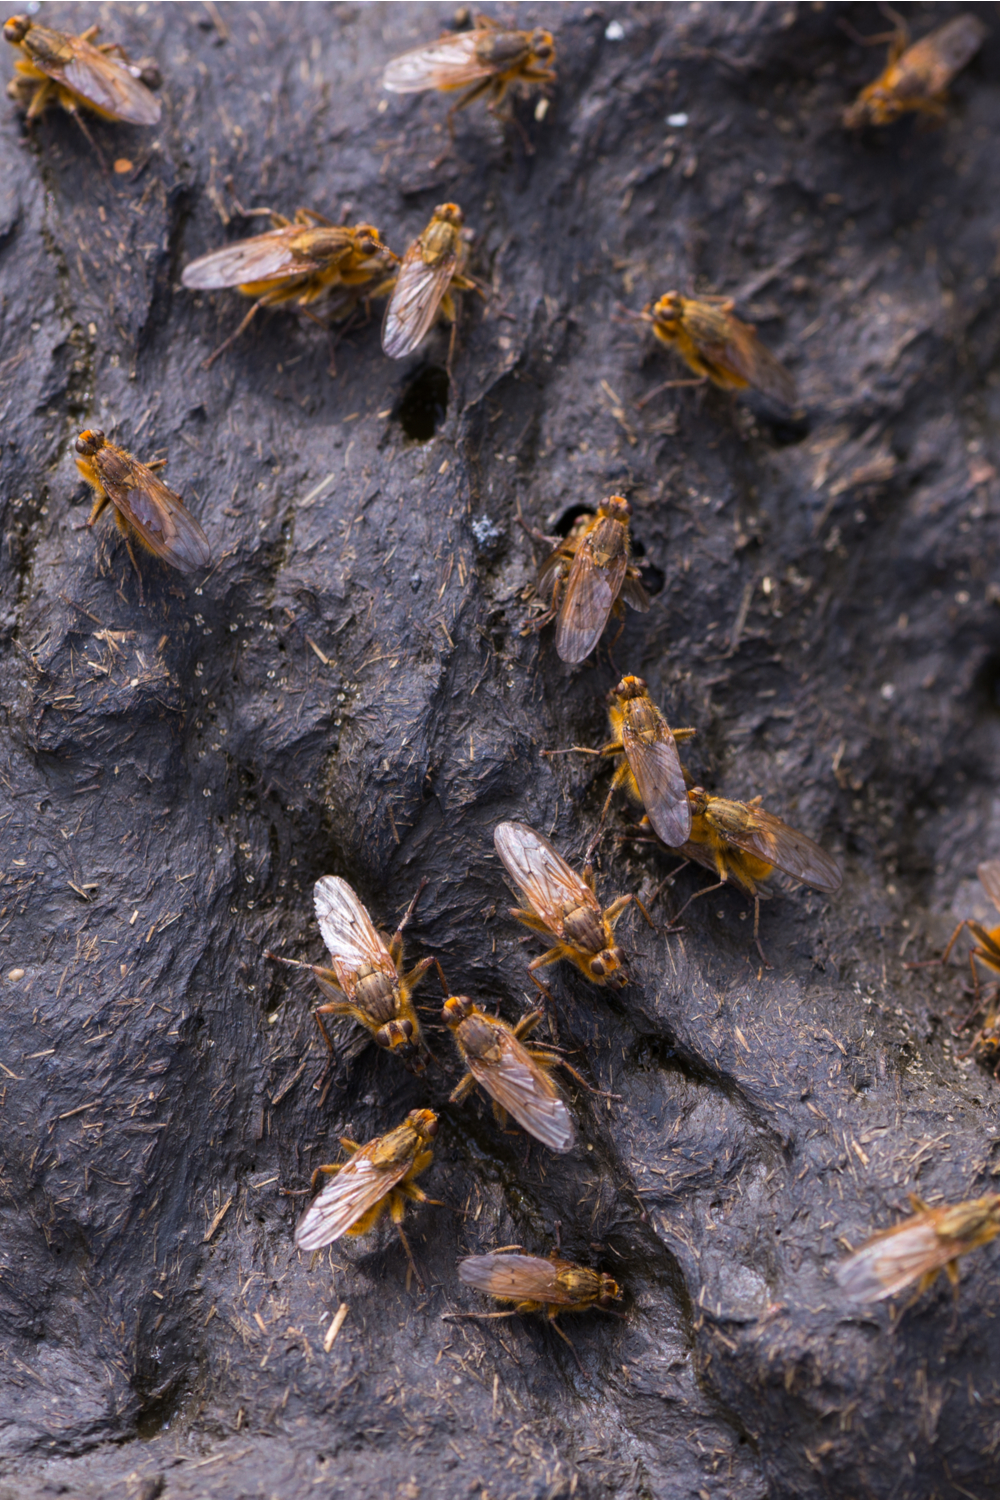 How do flies swarm around feces so quickly